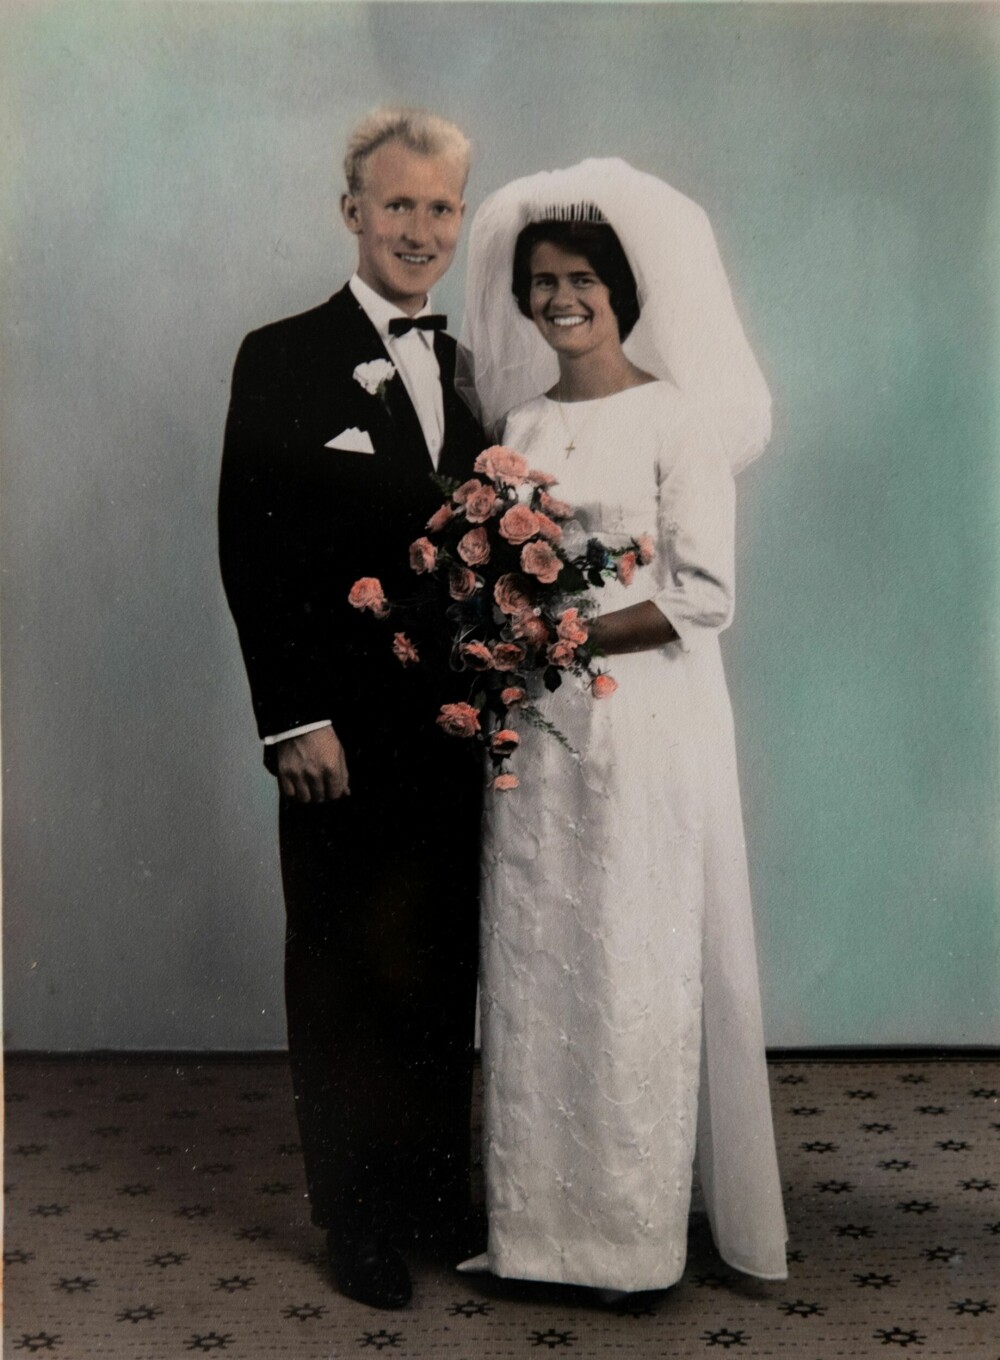 <b>TIL DØDEN SKILTE DEM:</b> Herdis og Sigmund giftet seg høsten 1966.